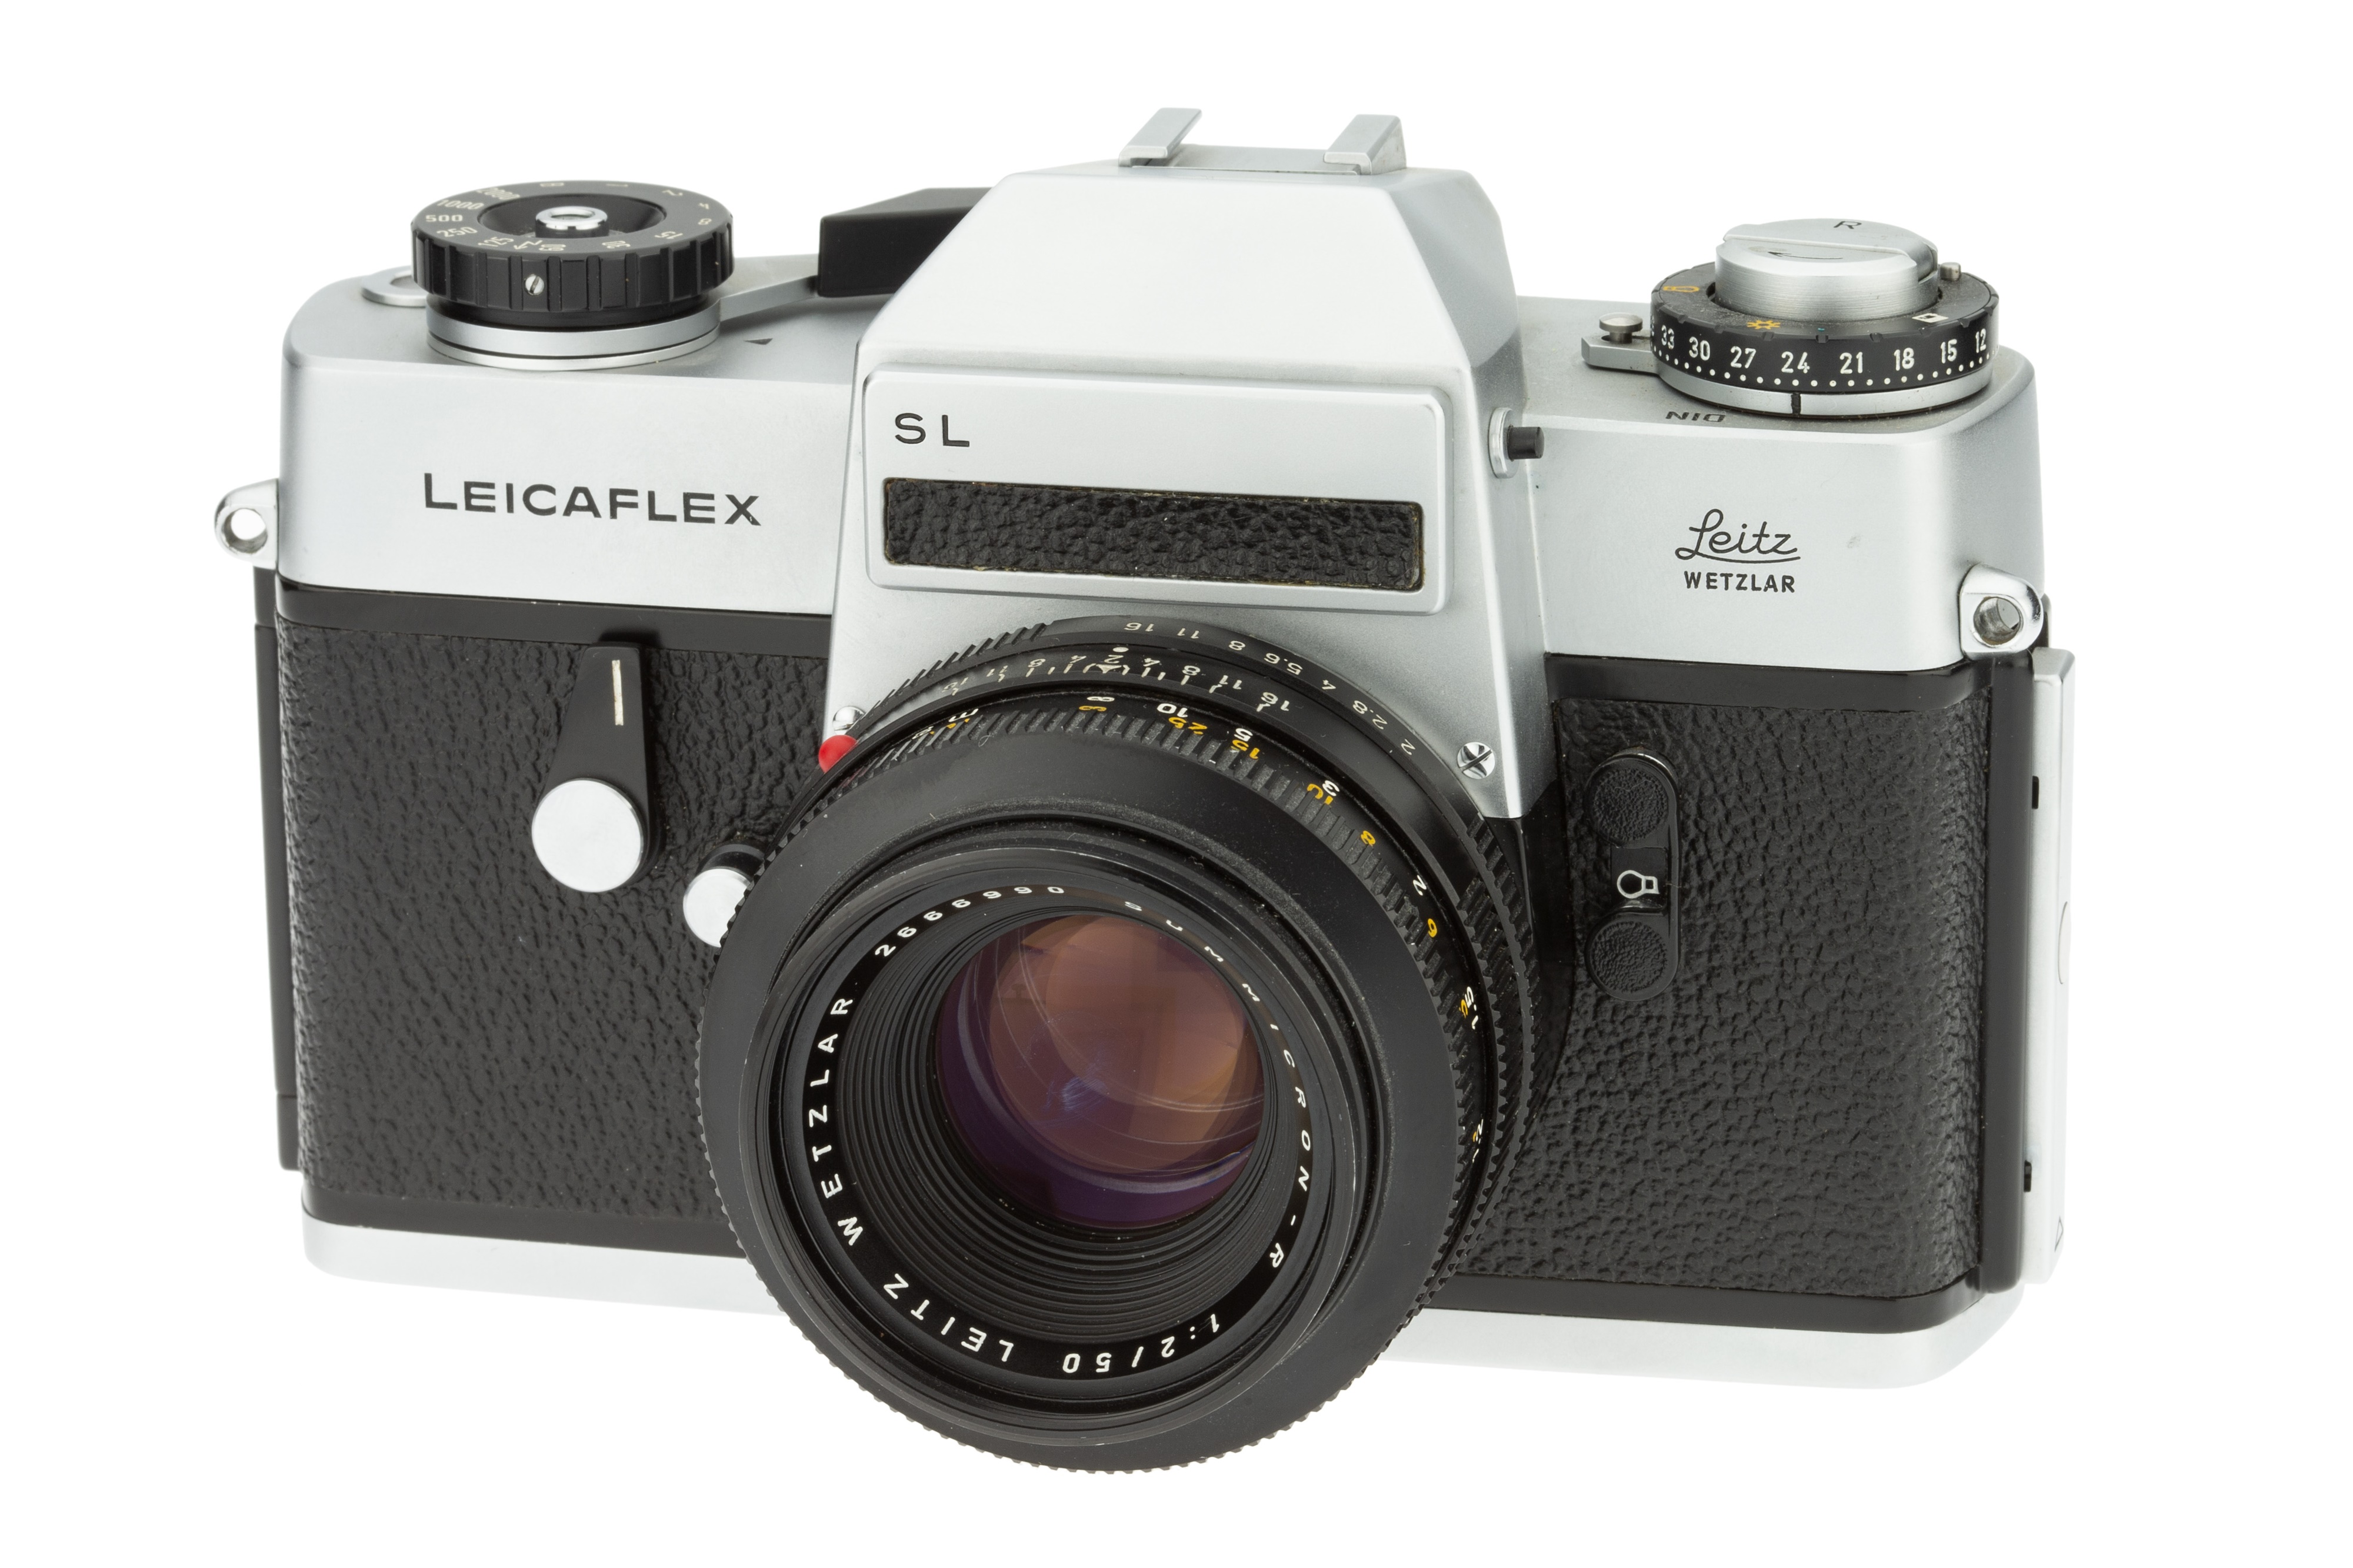 A Leica Leicaflex SL SLR Camera,